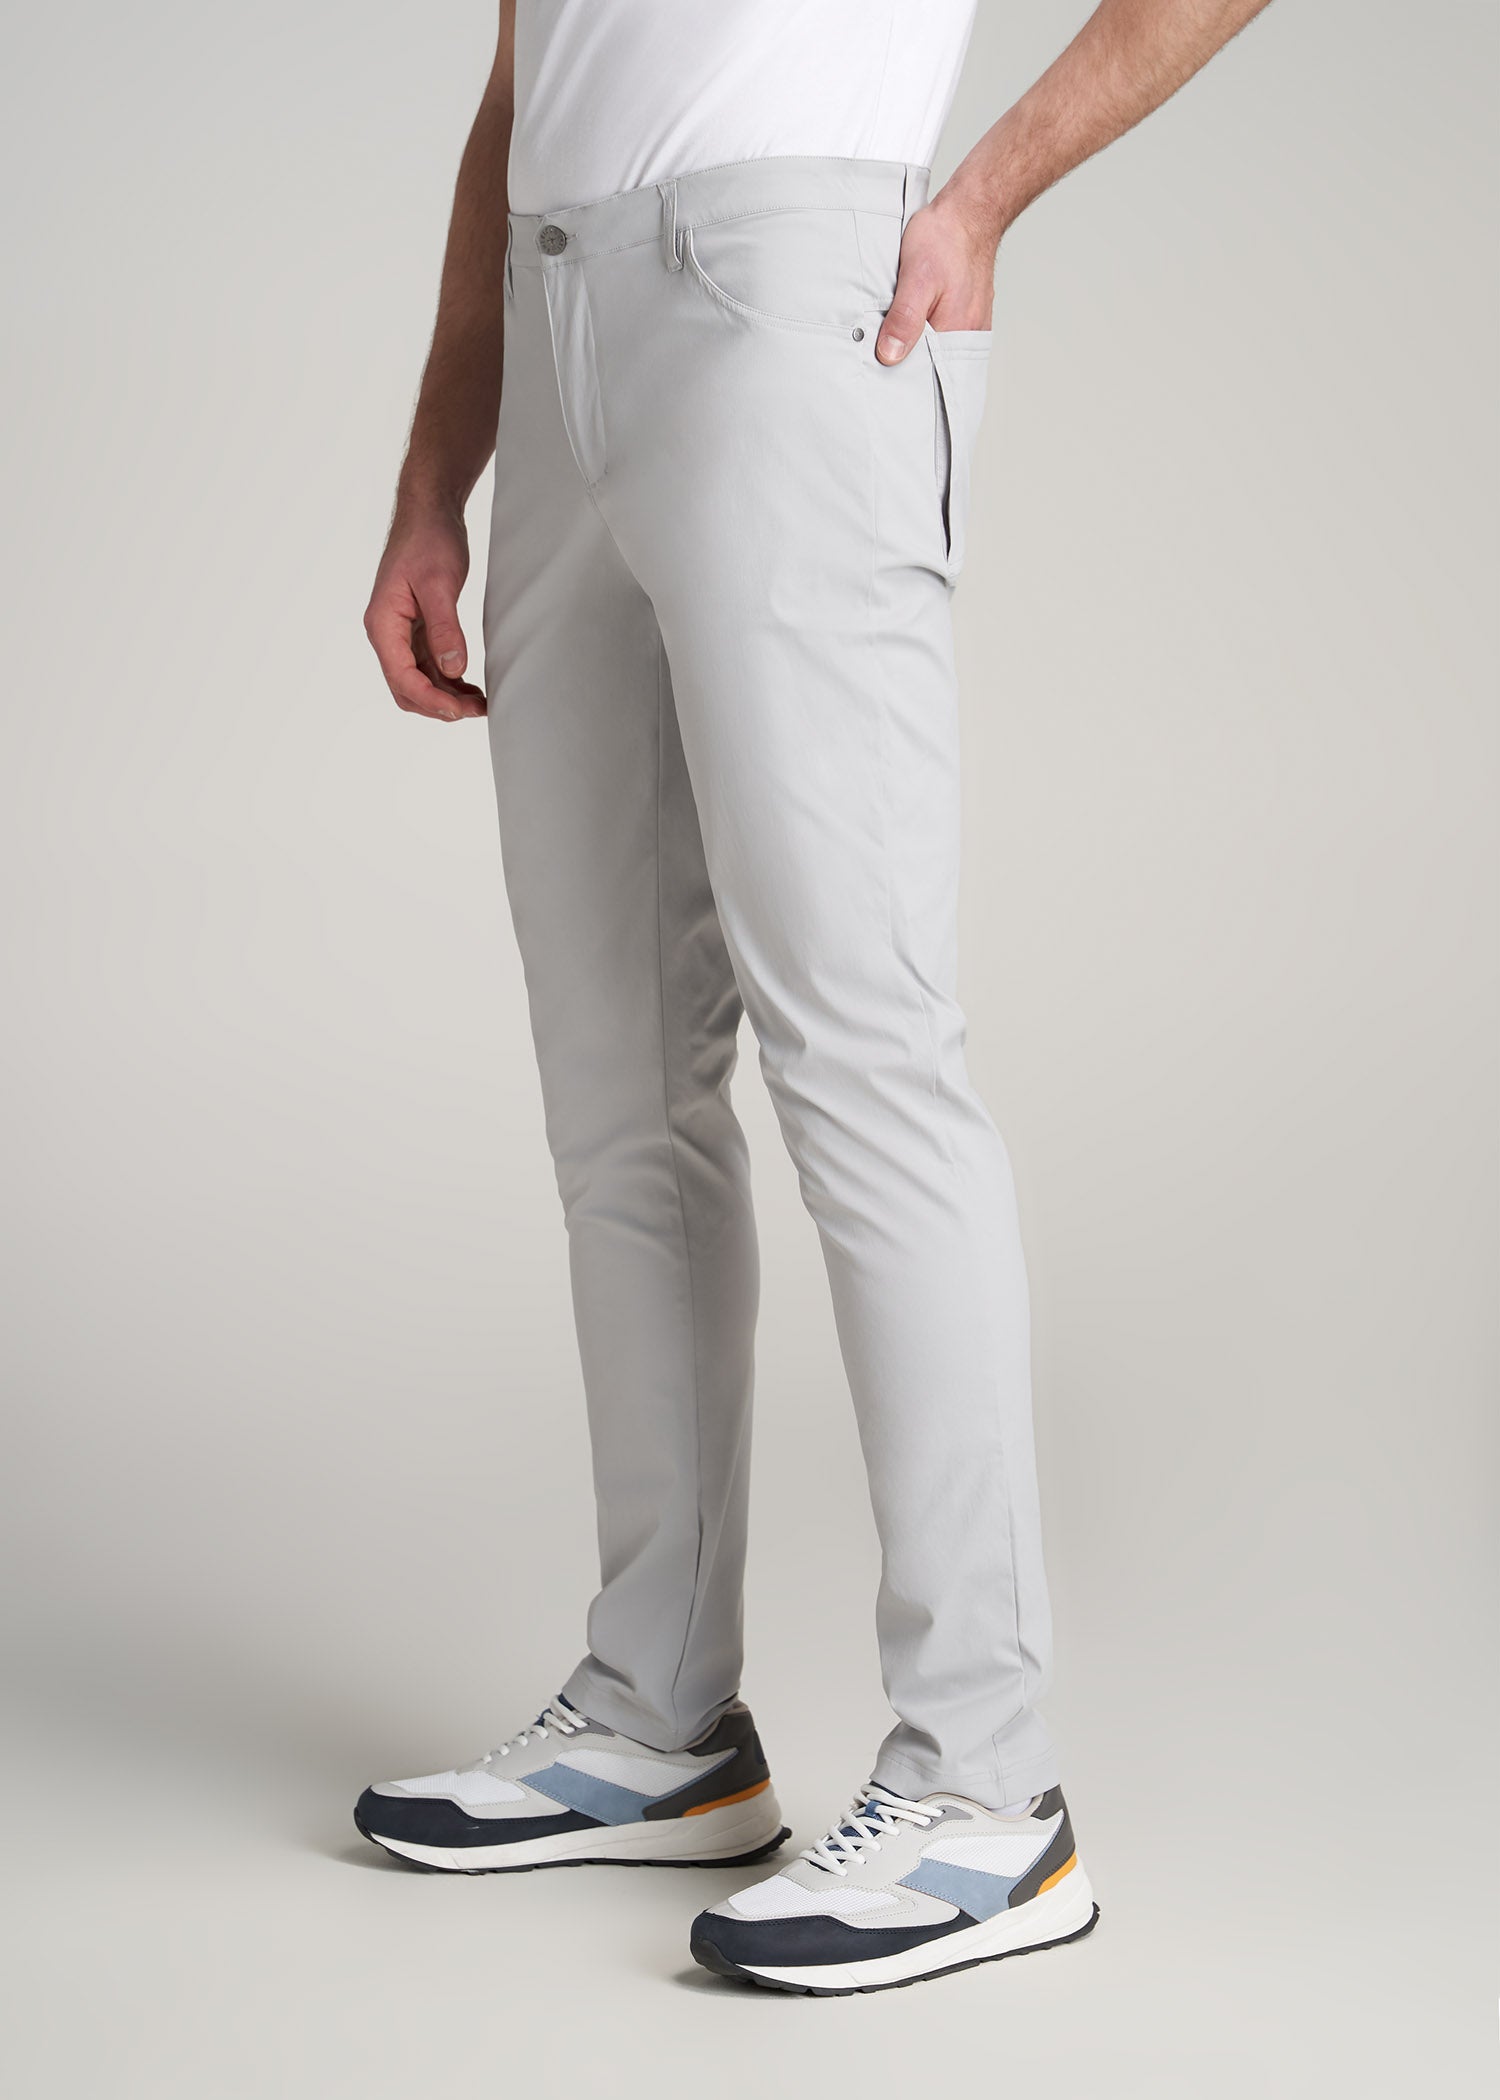 JOLYSINGCP Travel Pants For Men Men's Casual Cotton Multi Pocket Cargo Pants  Side Pocket Jeans Skinny Jeans Skinny Jeans Casual Comfortable (Color :  Silver, Size : 1) : Buy Online at Best